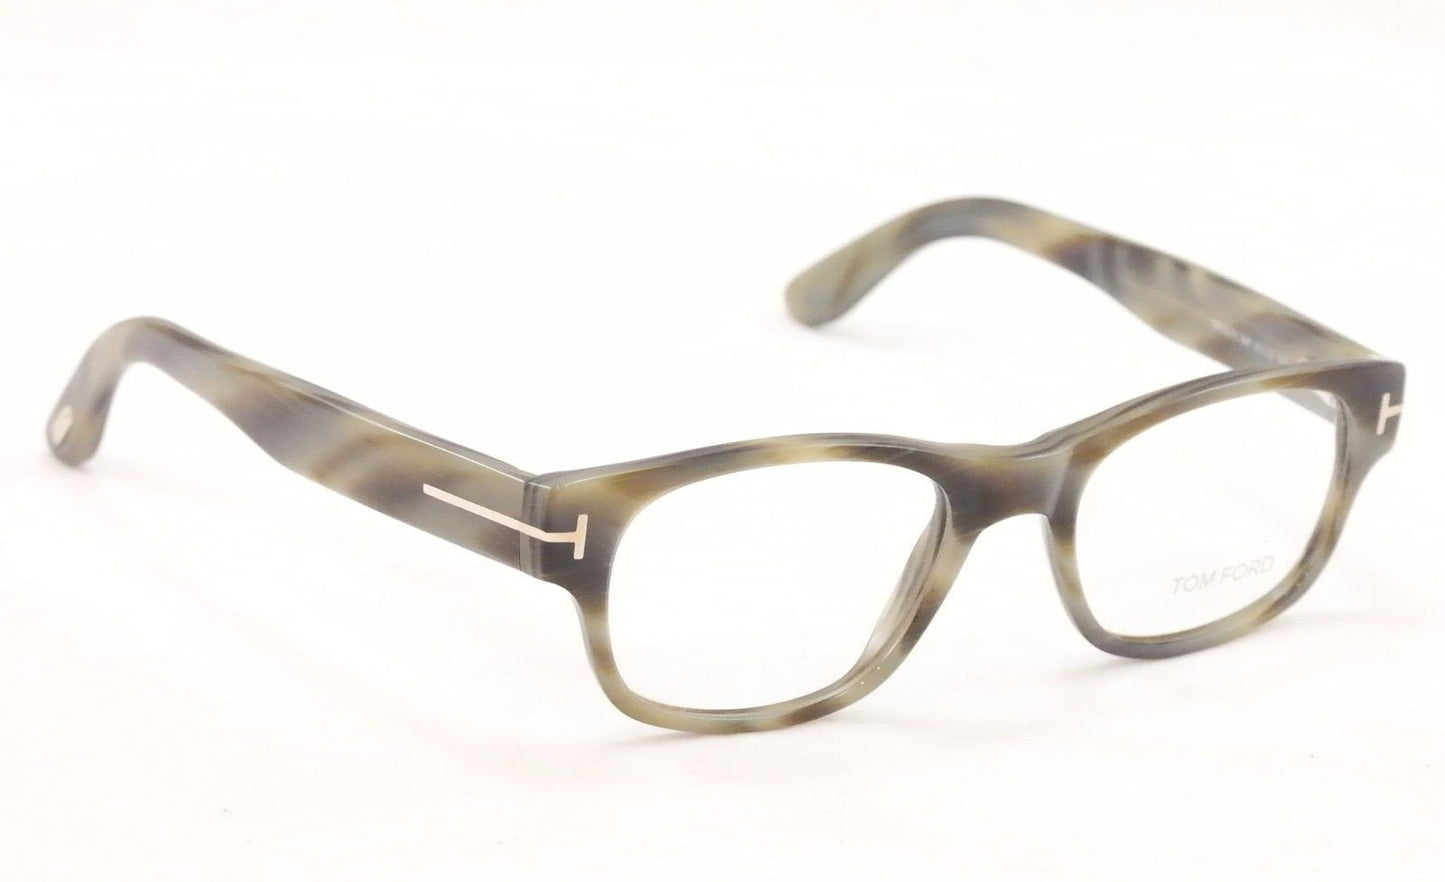 Tom Ford Eyeglasses Frame TF5276 64F Gray Tortoise Plastic Italy Made 51-19-145 - Frame Bay